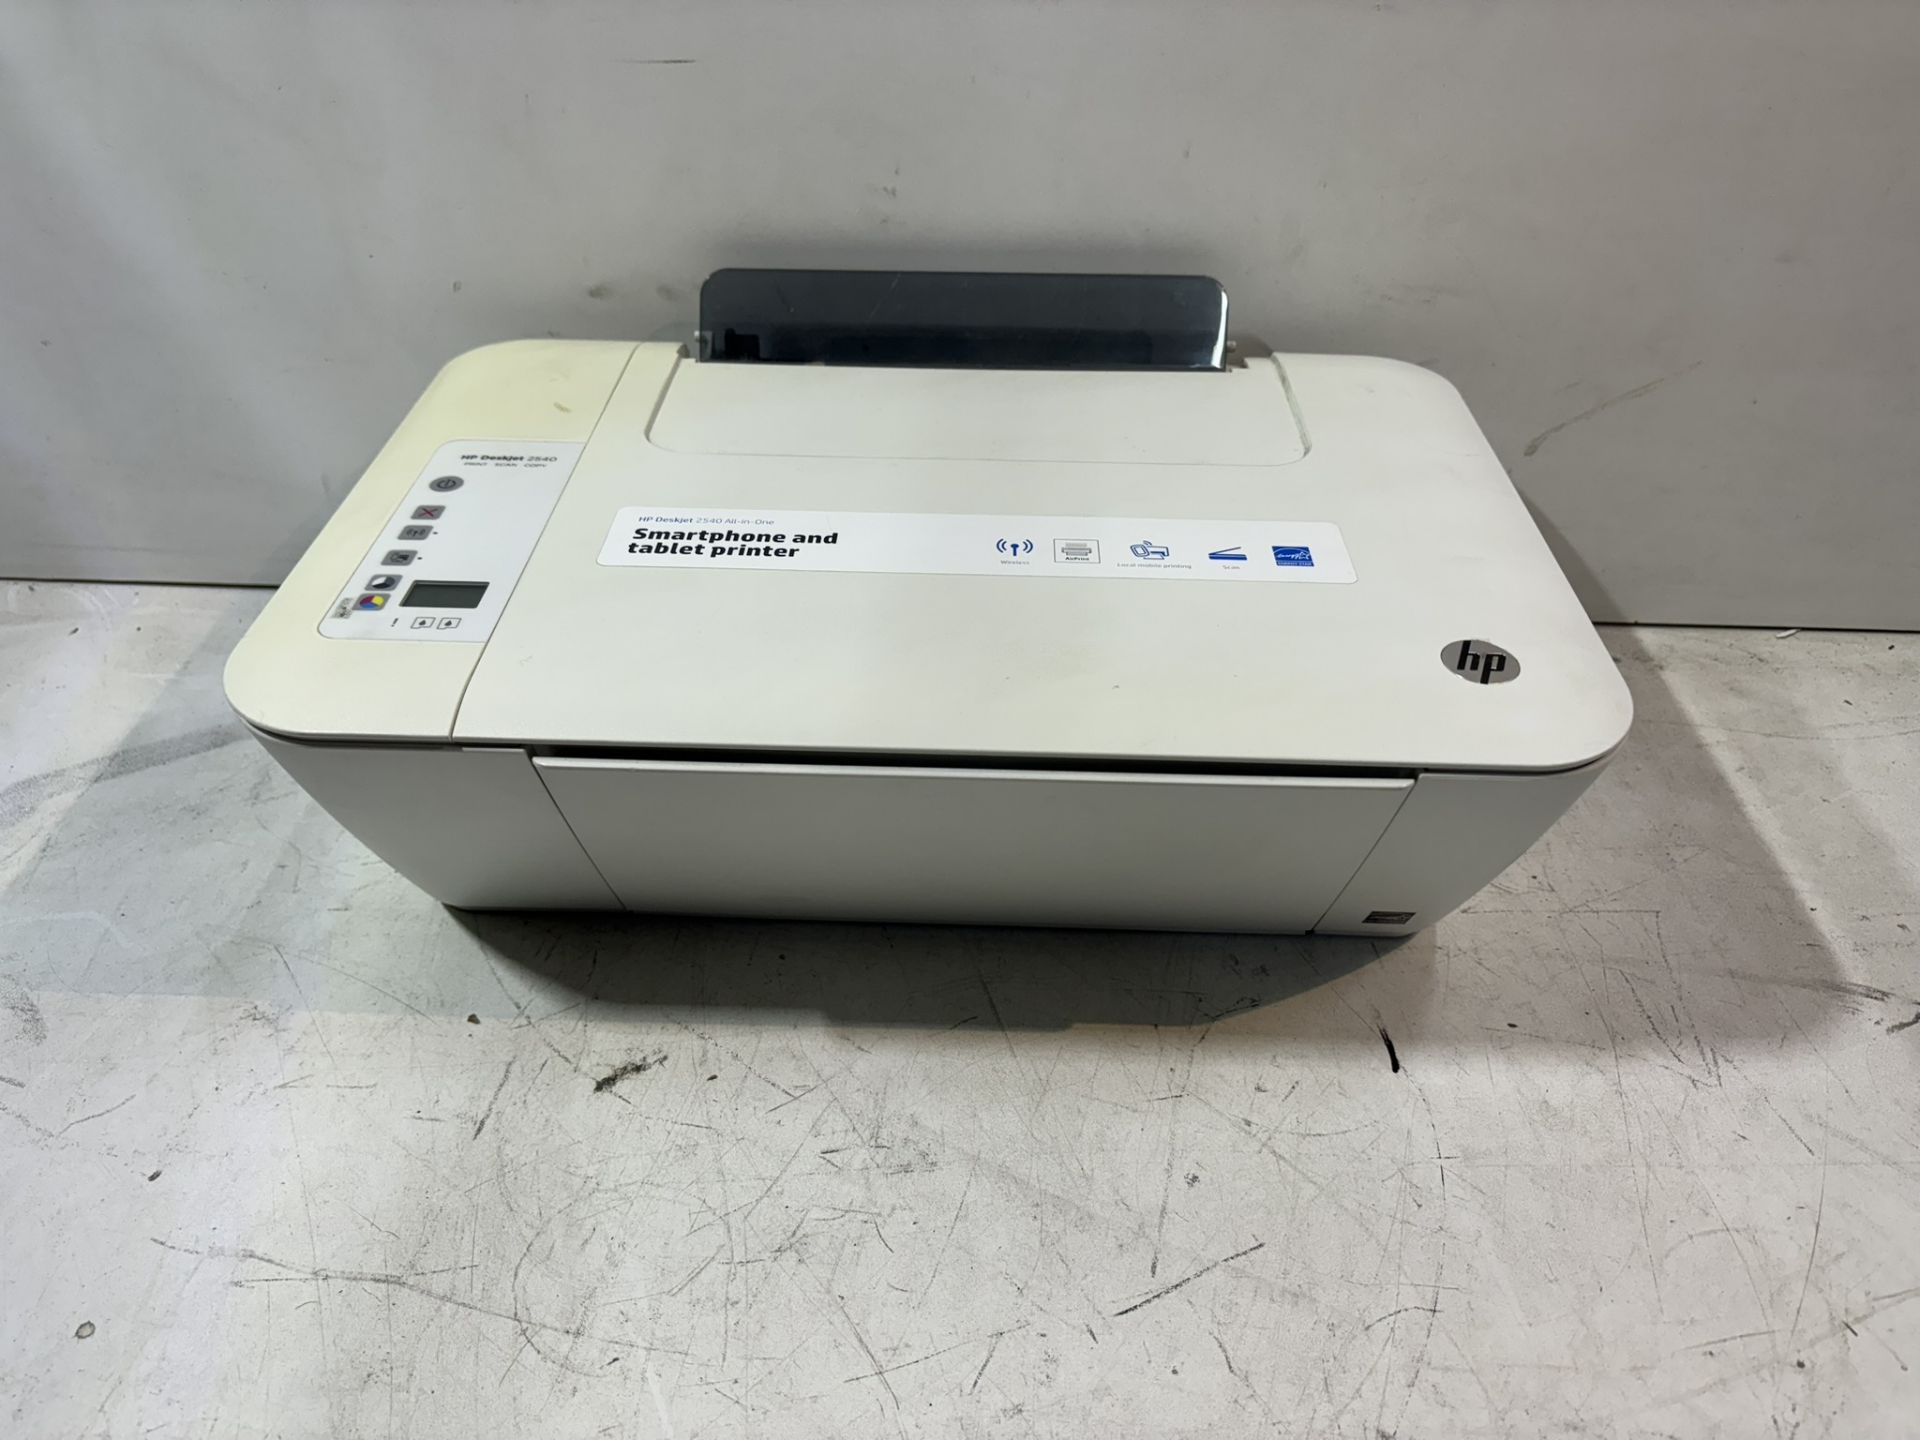 HP Deskjet 2540 All-in-One Printer